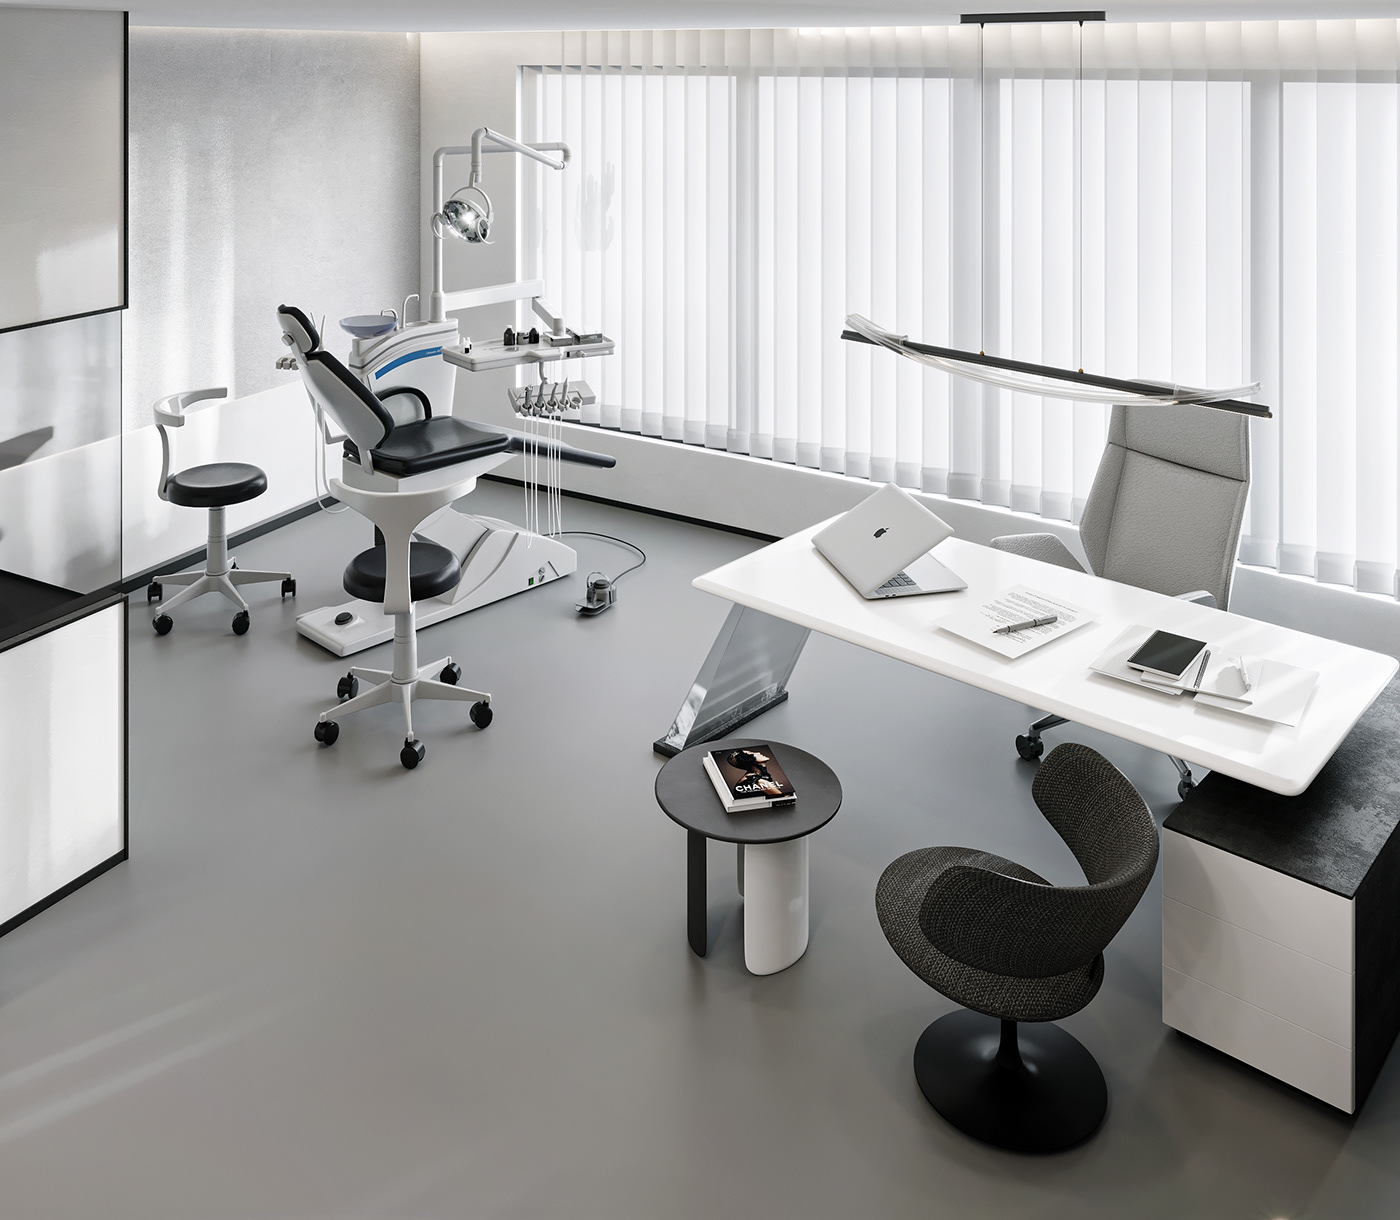 Interior clinic dentist design 3ds max visualization Render architecture modern